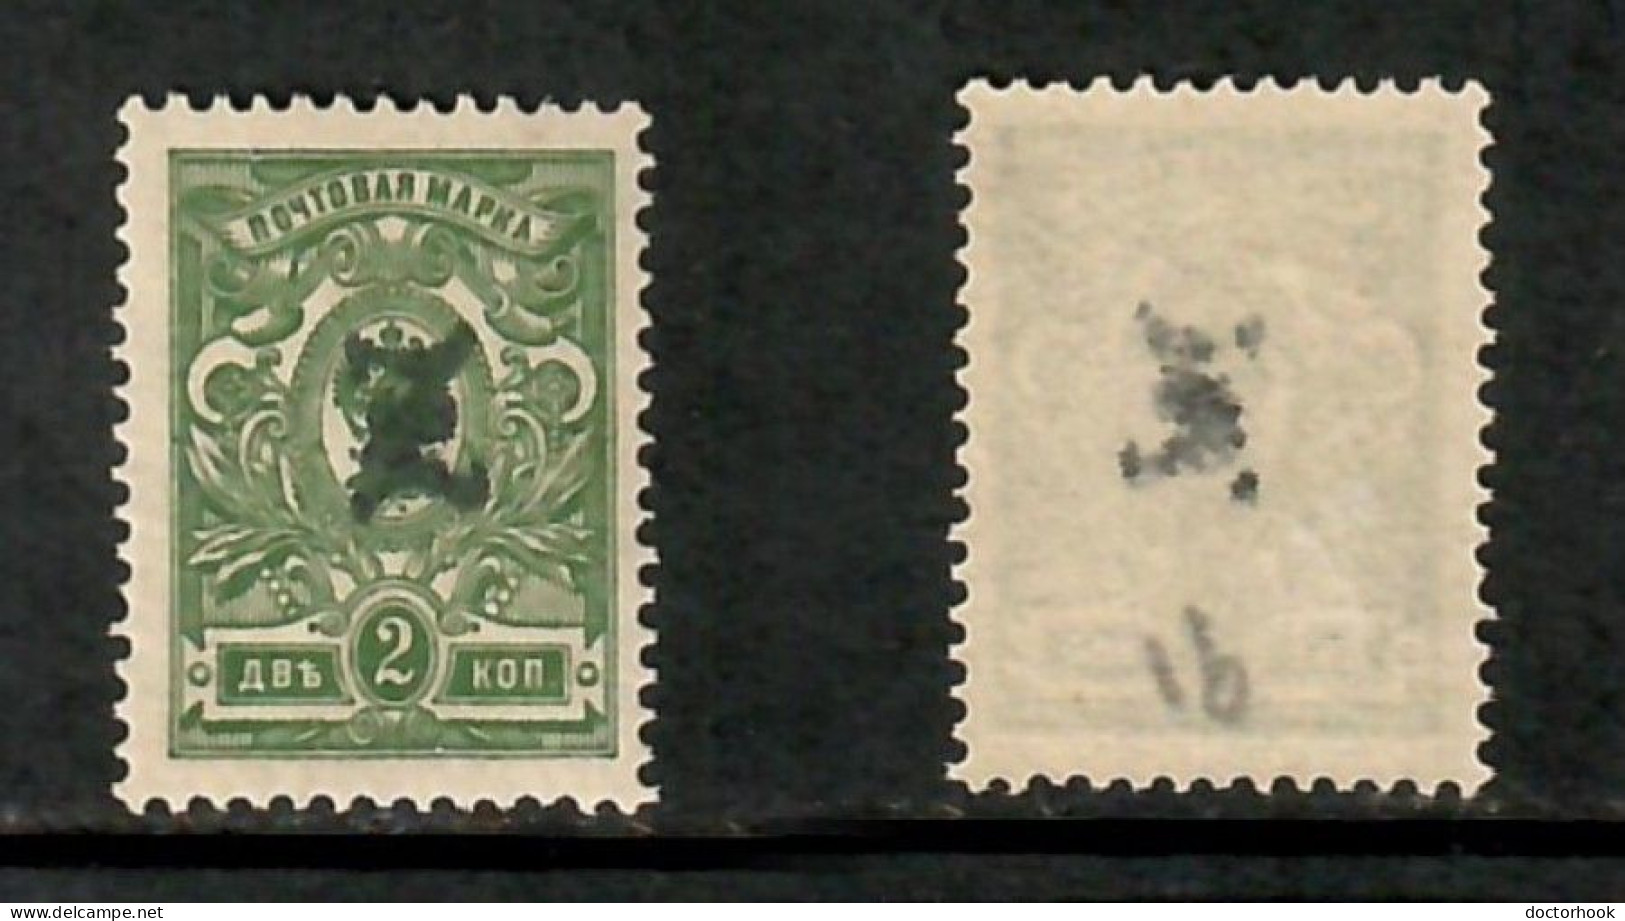 ARMENIA    Scott # 91a* MINT LH (CONDITION PER SCAN) (Stamp Scan # 1044-2) - Armenia